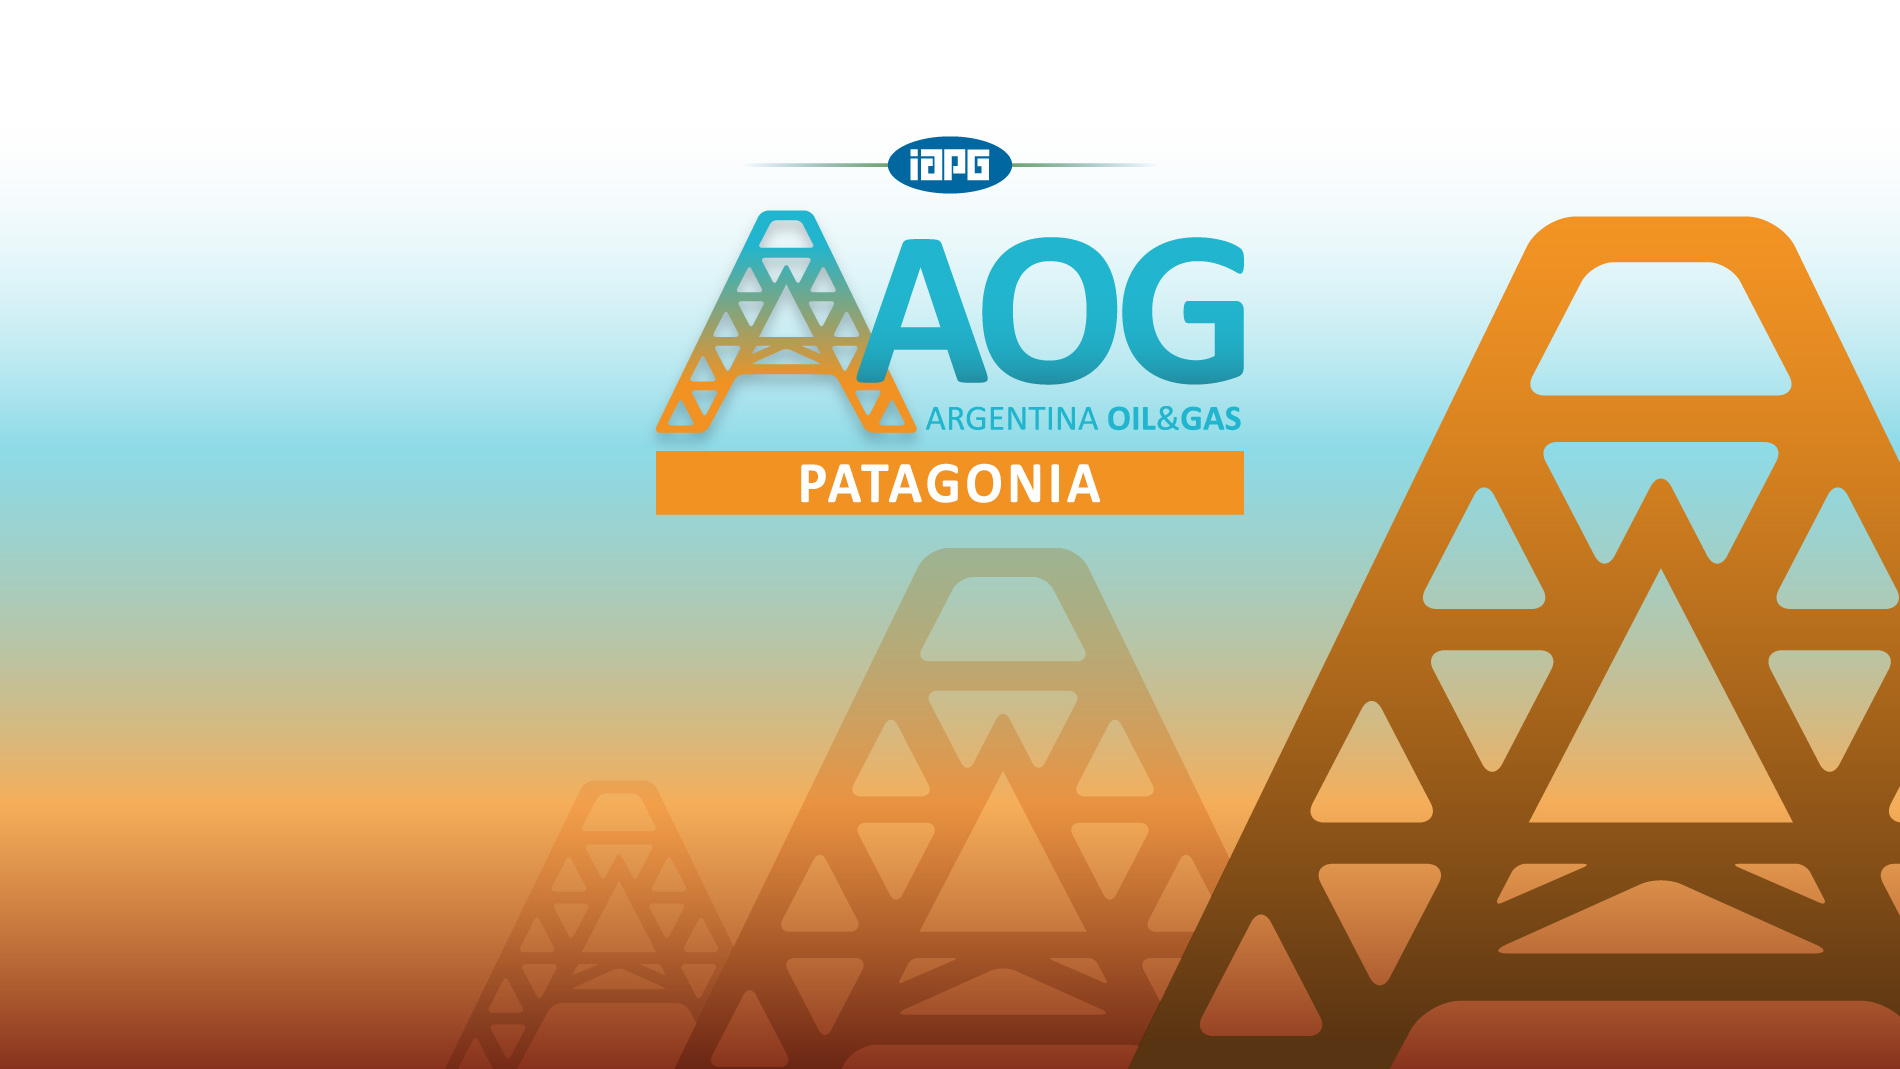 Argentina Oil & Gas Patagonia